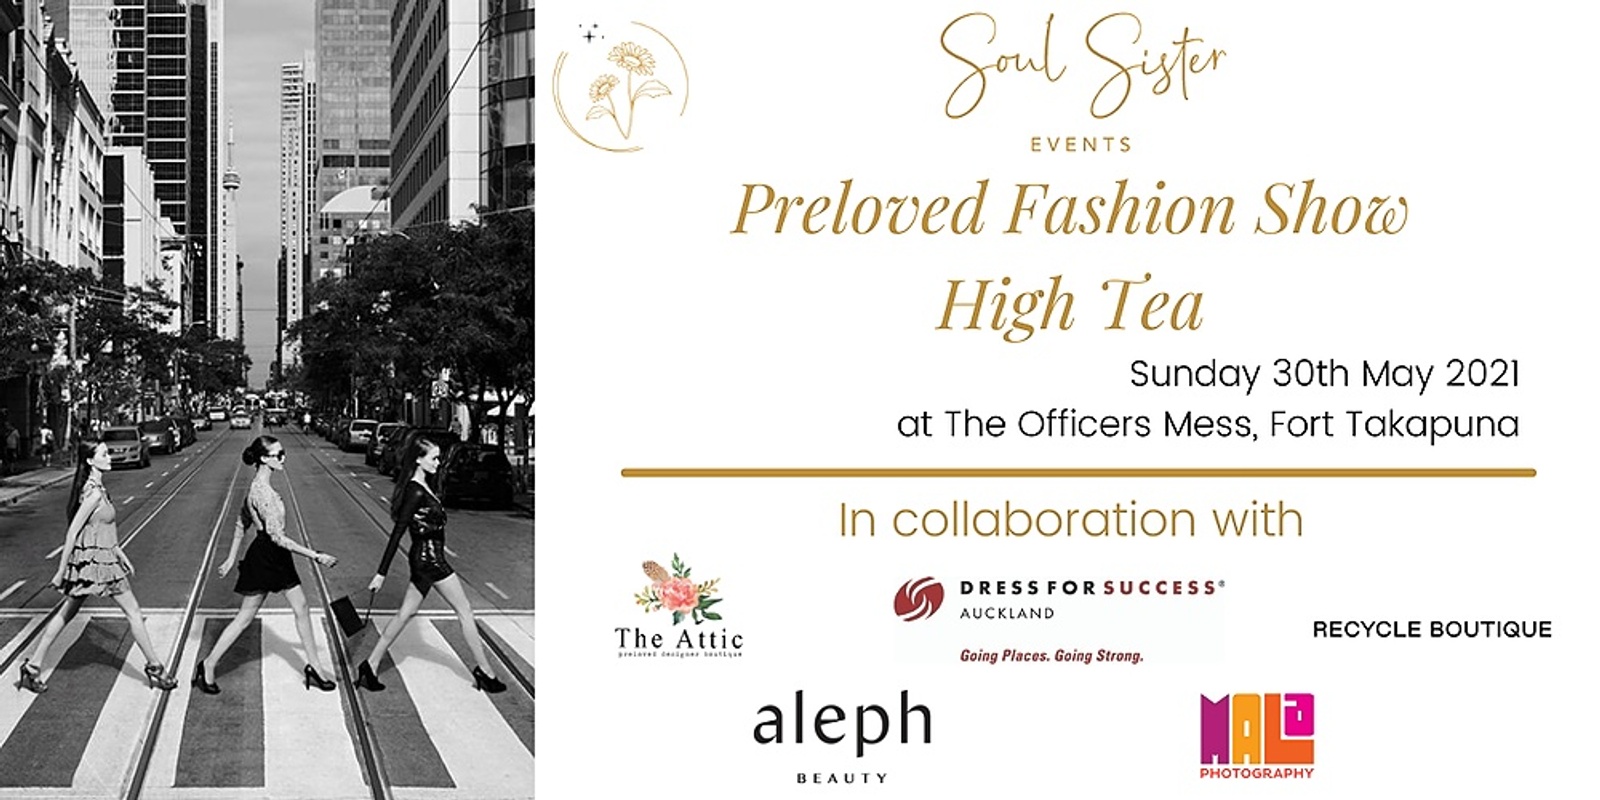 Banner image for Soul Sister Events Preloved Fashion Show High Tea